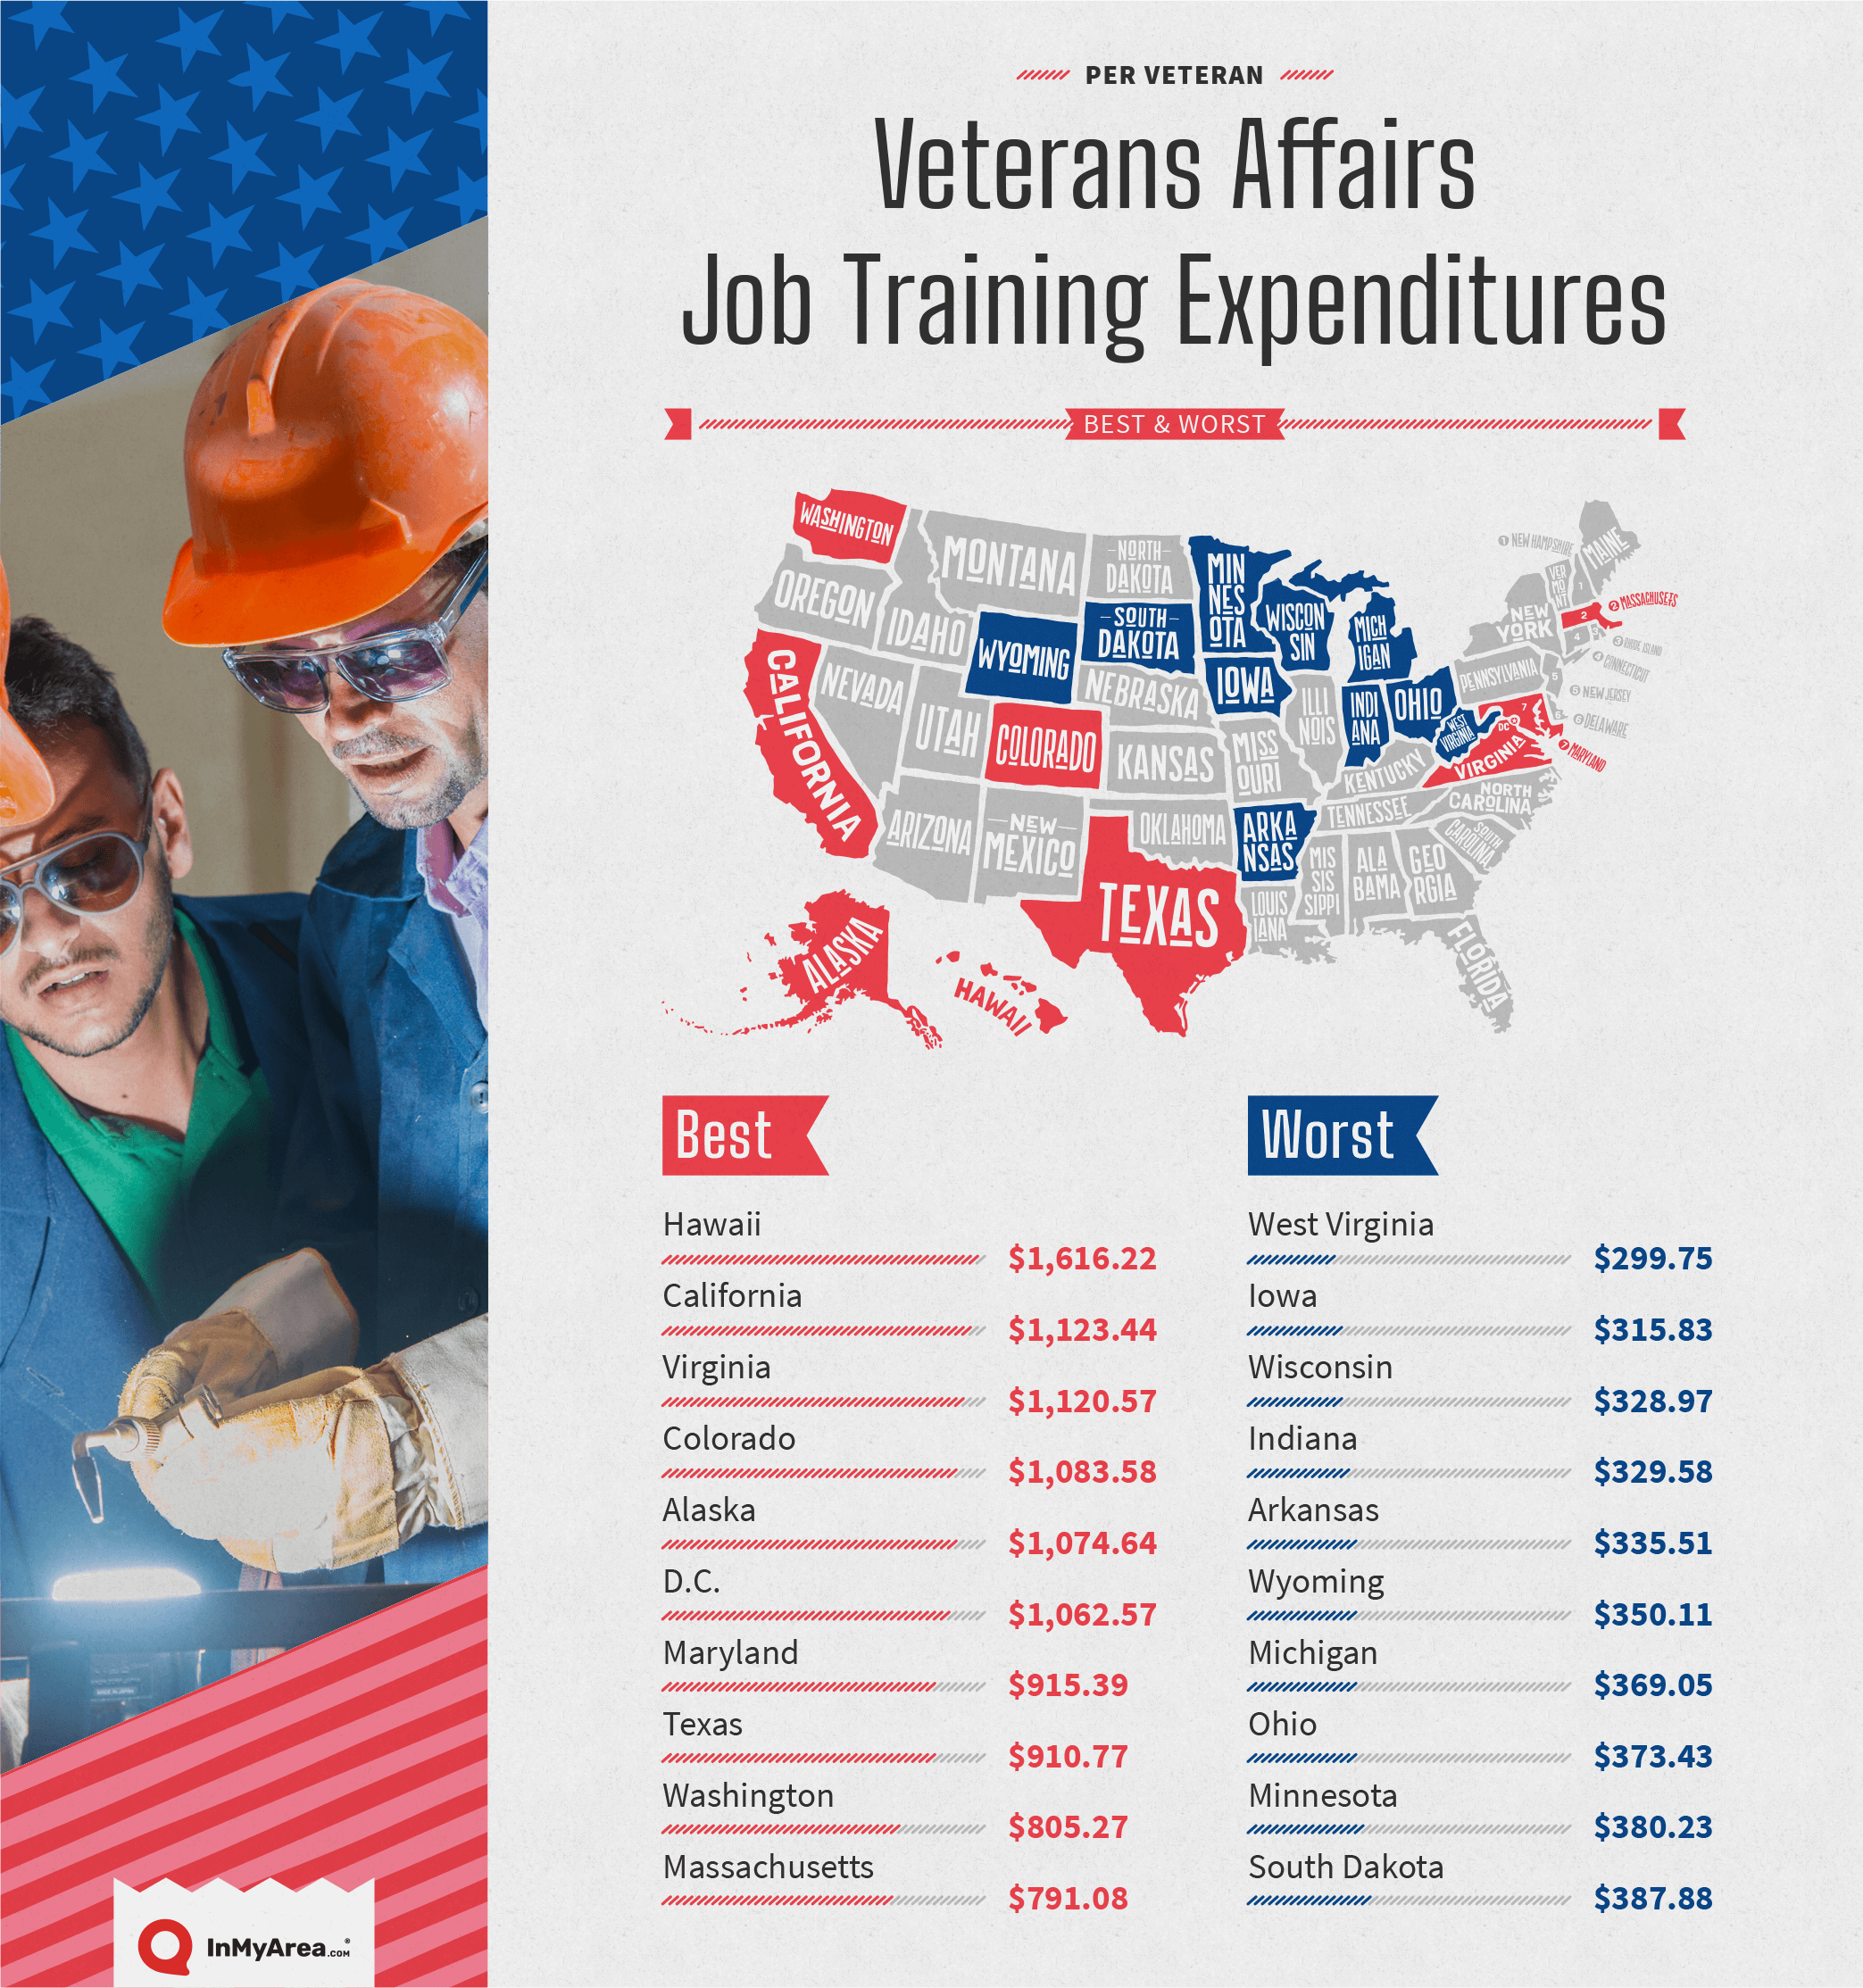 graph showing veterans affairs job training expentitures